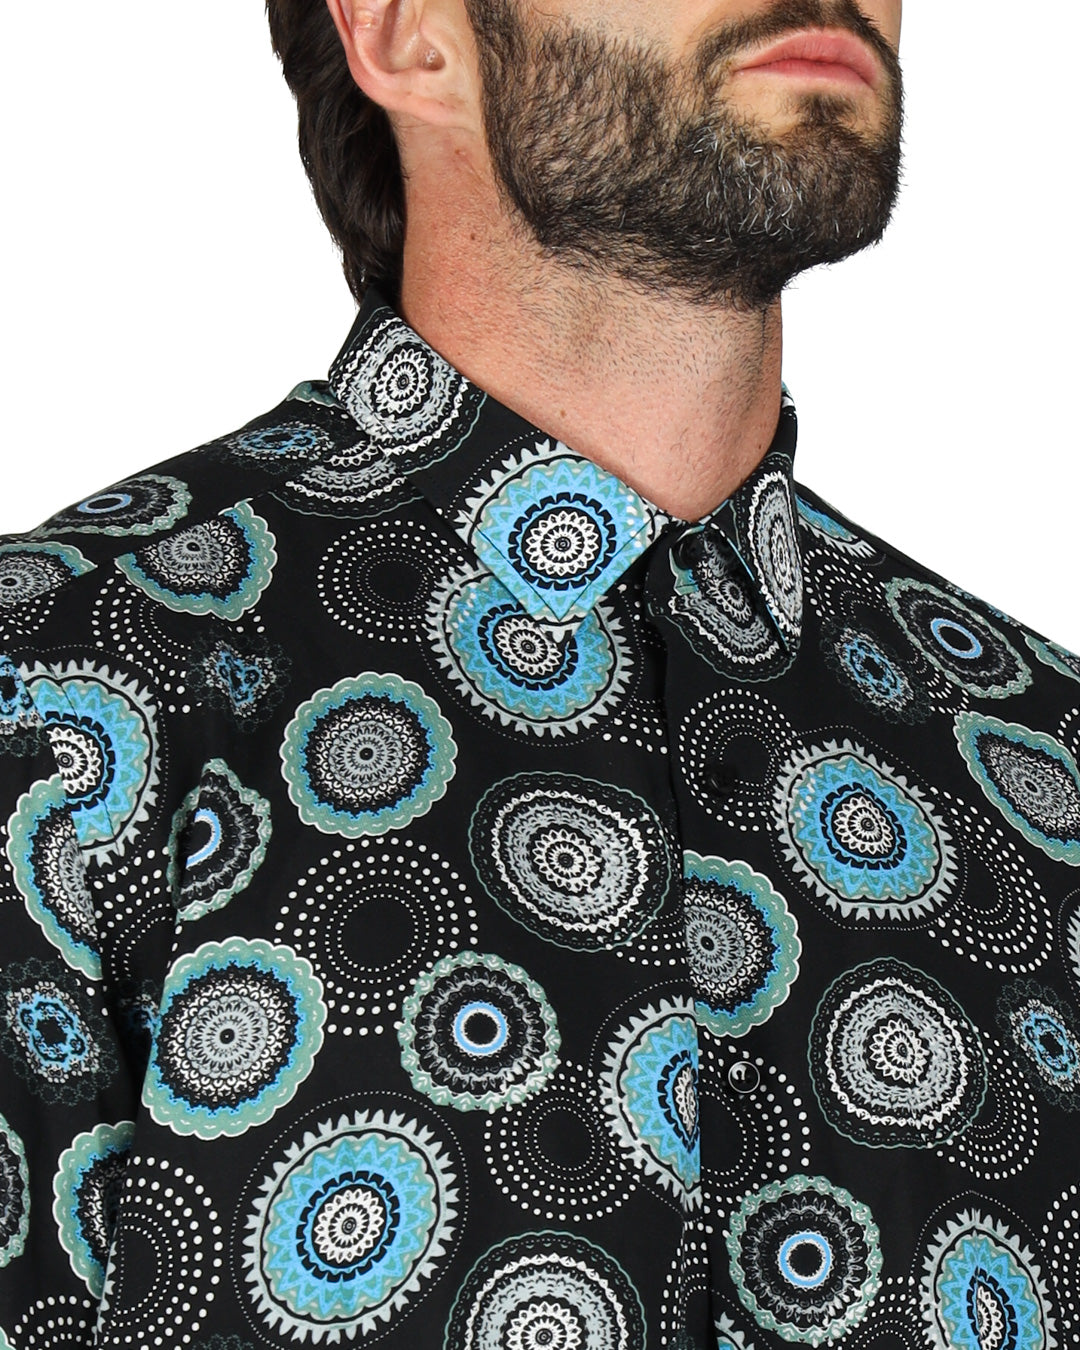 Tobago - Classic black circular pattern shirt